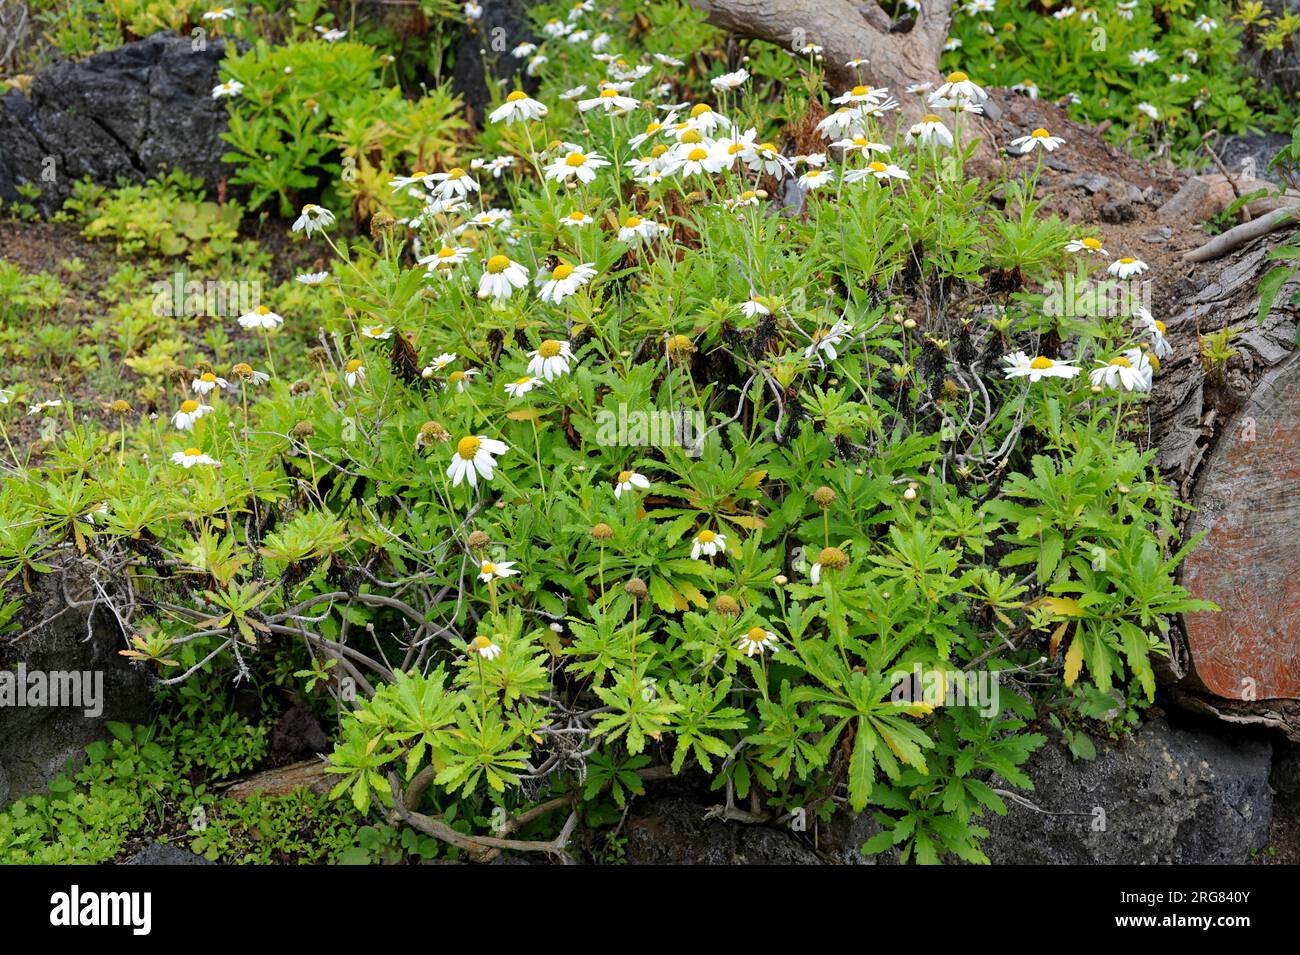 Estreleira, malmequer or pampilhos (Argyranthemum pinnatifidum) is a perennial herb endemic of Madeira Island, Portugal. Stock Photo